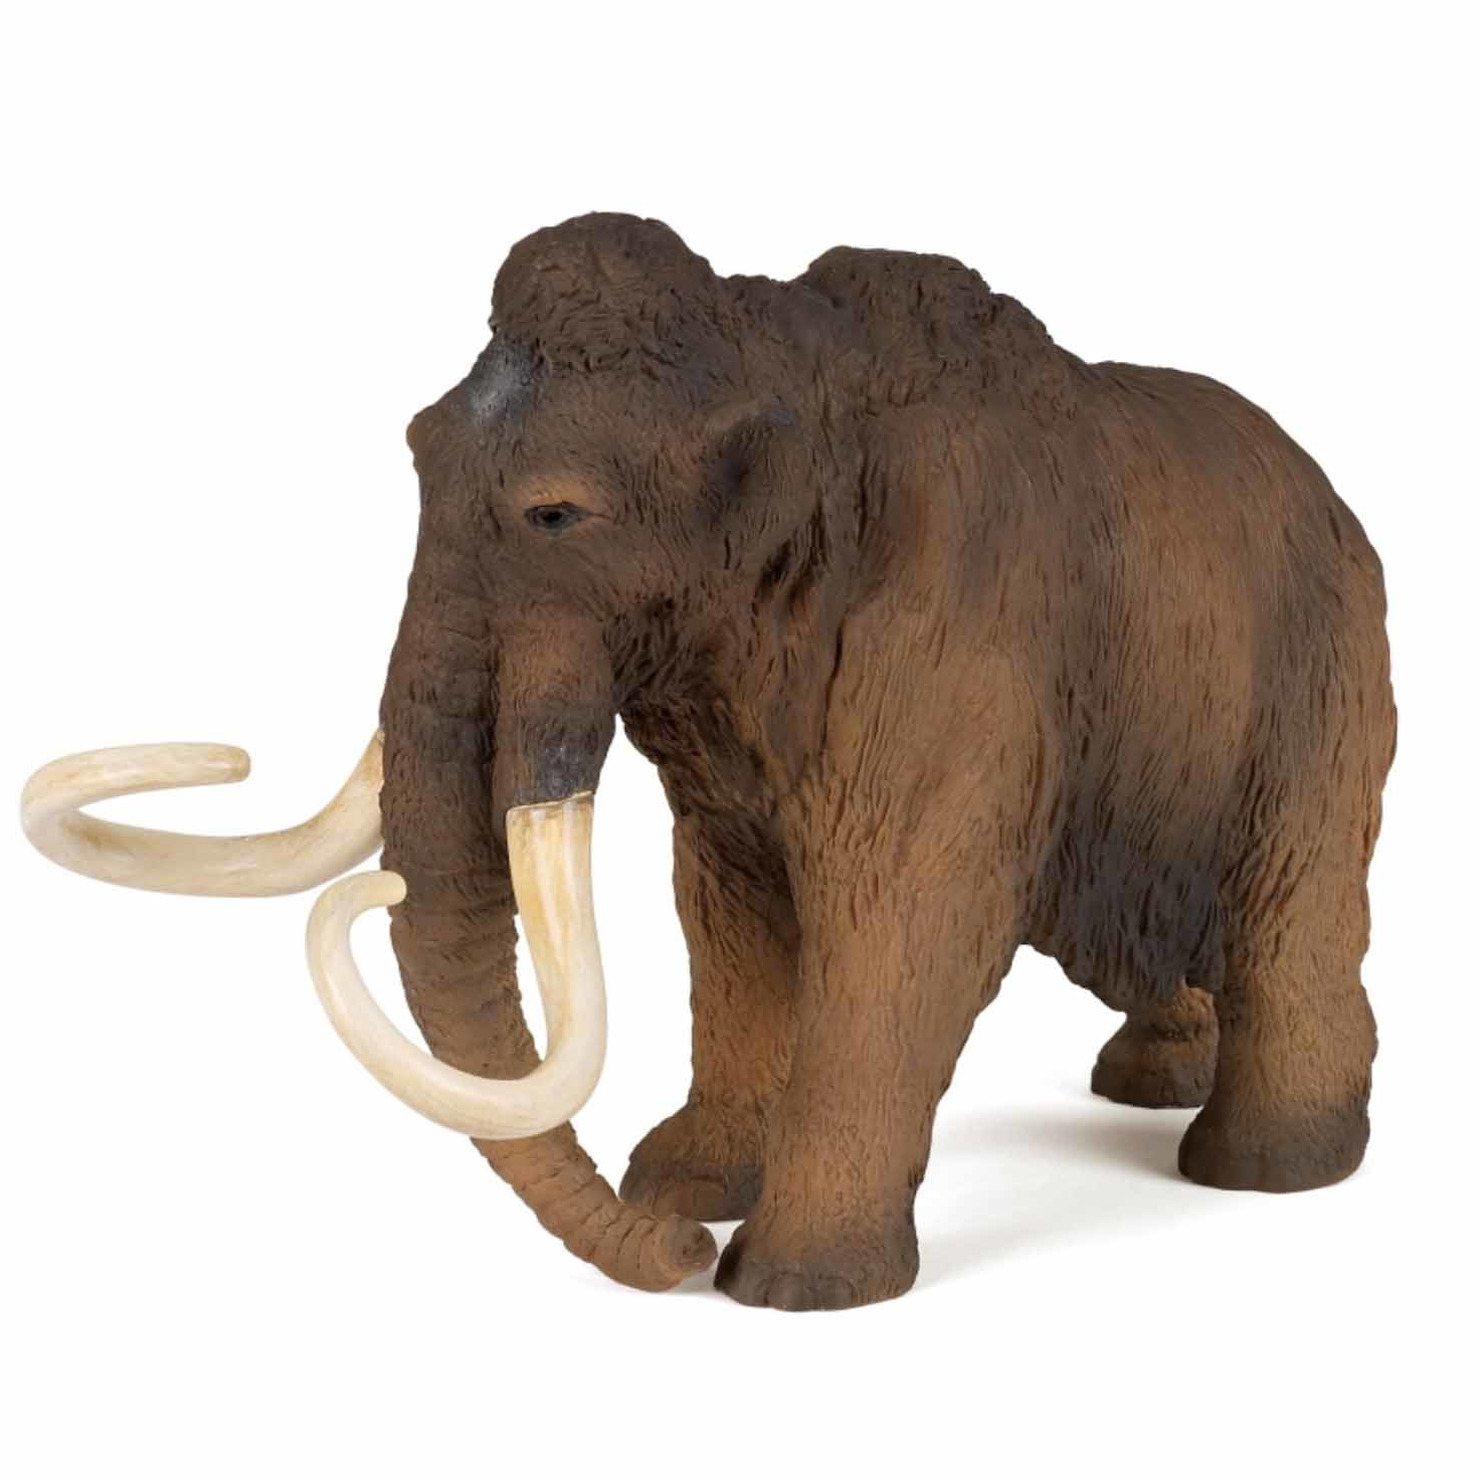 Plastic speelgoed figuur mammoet staand 20 cm